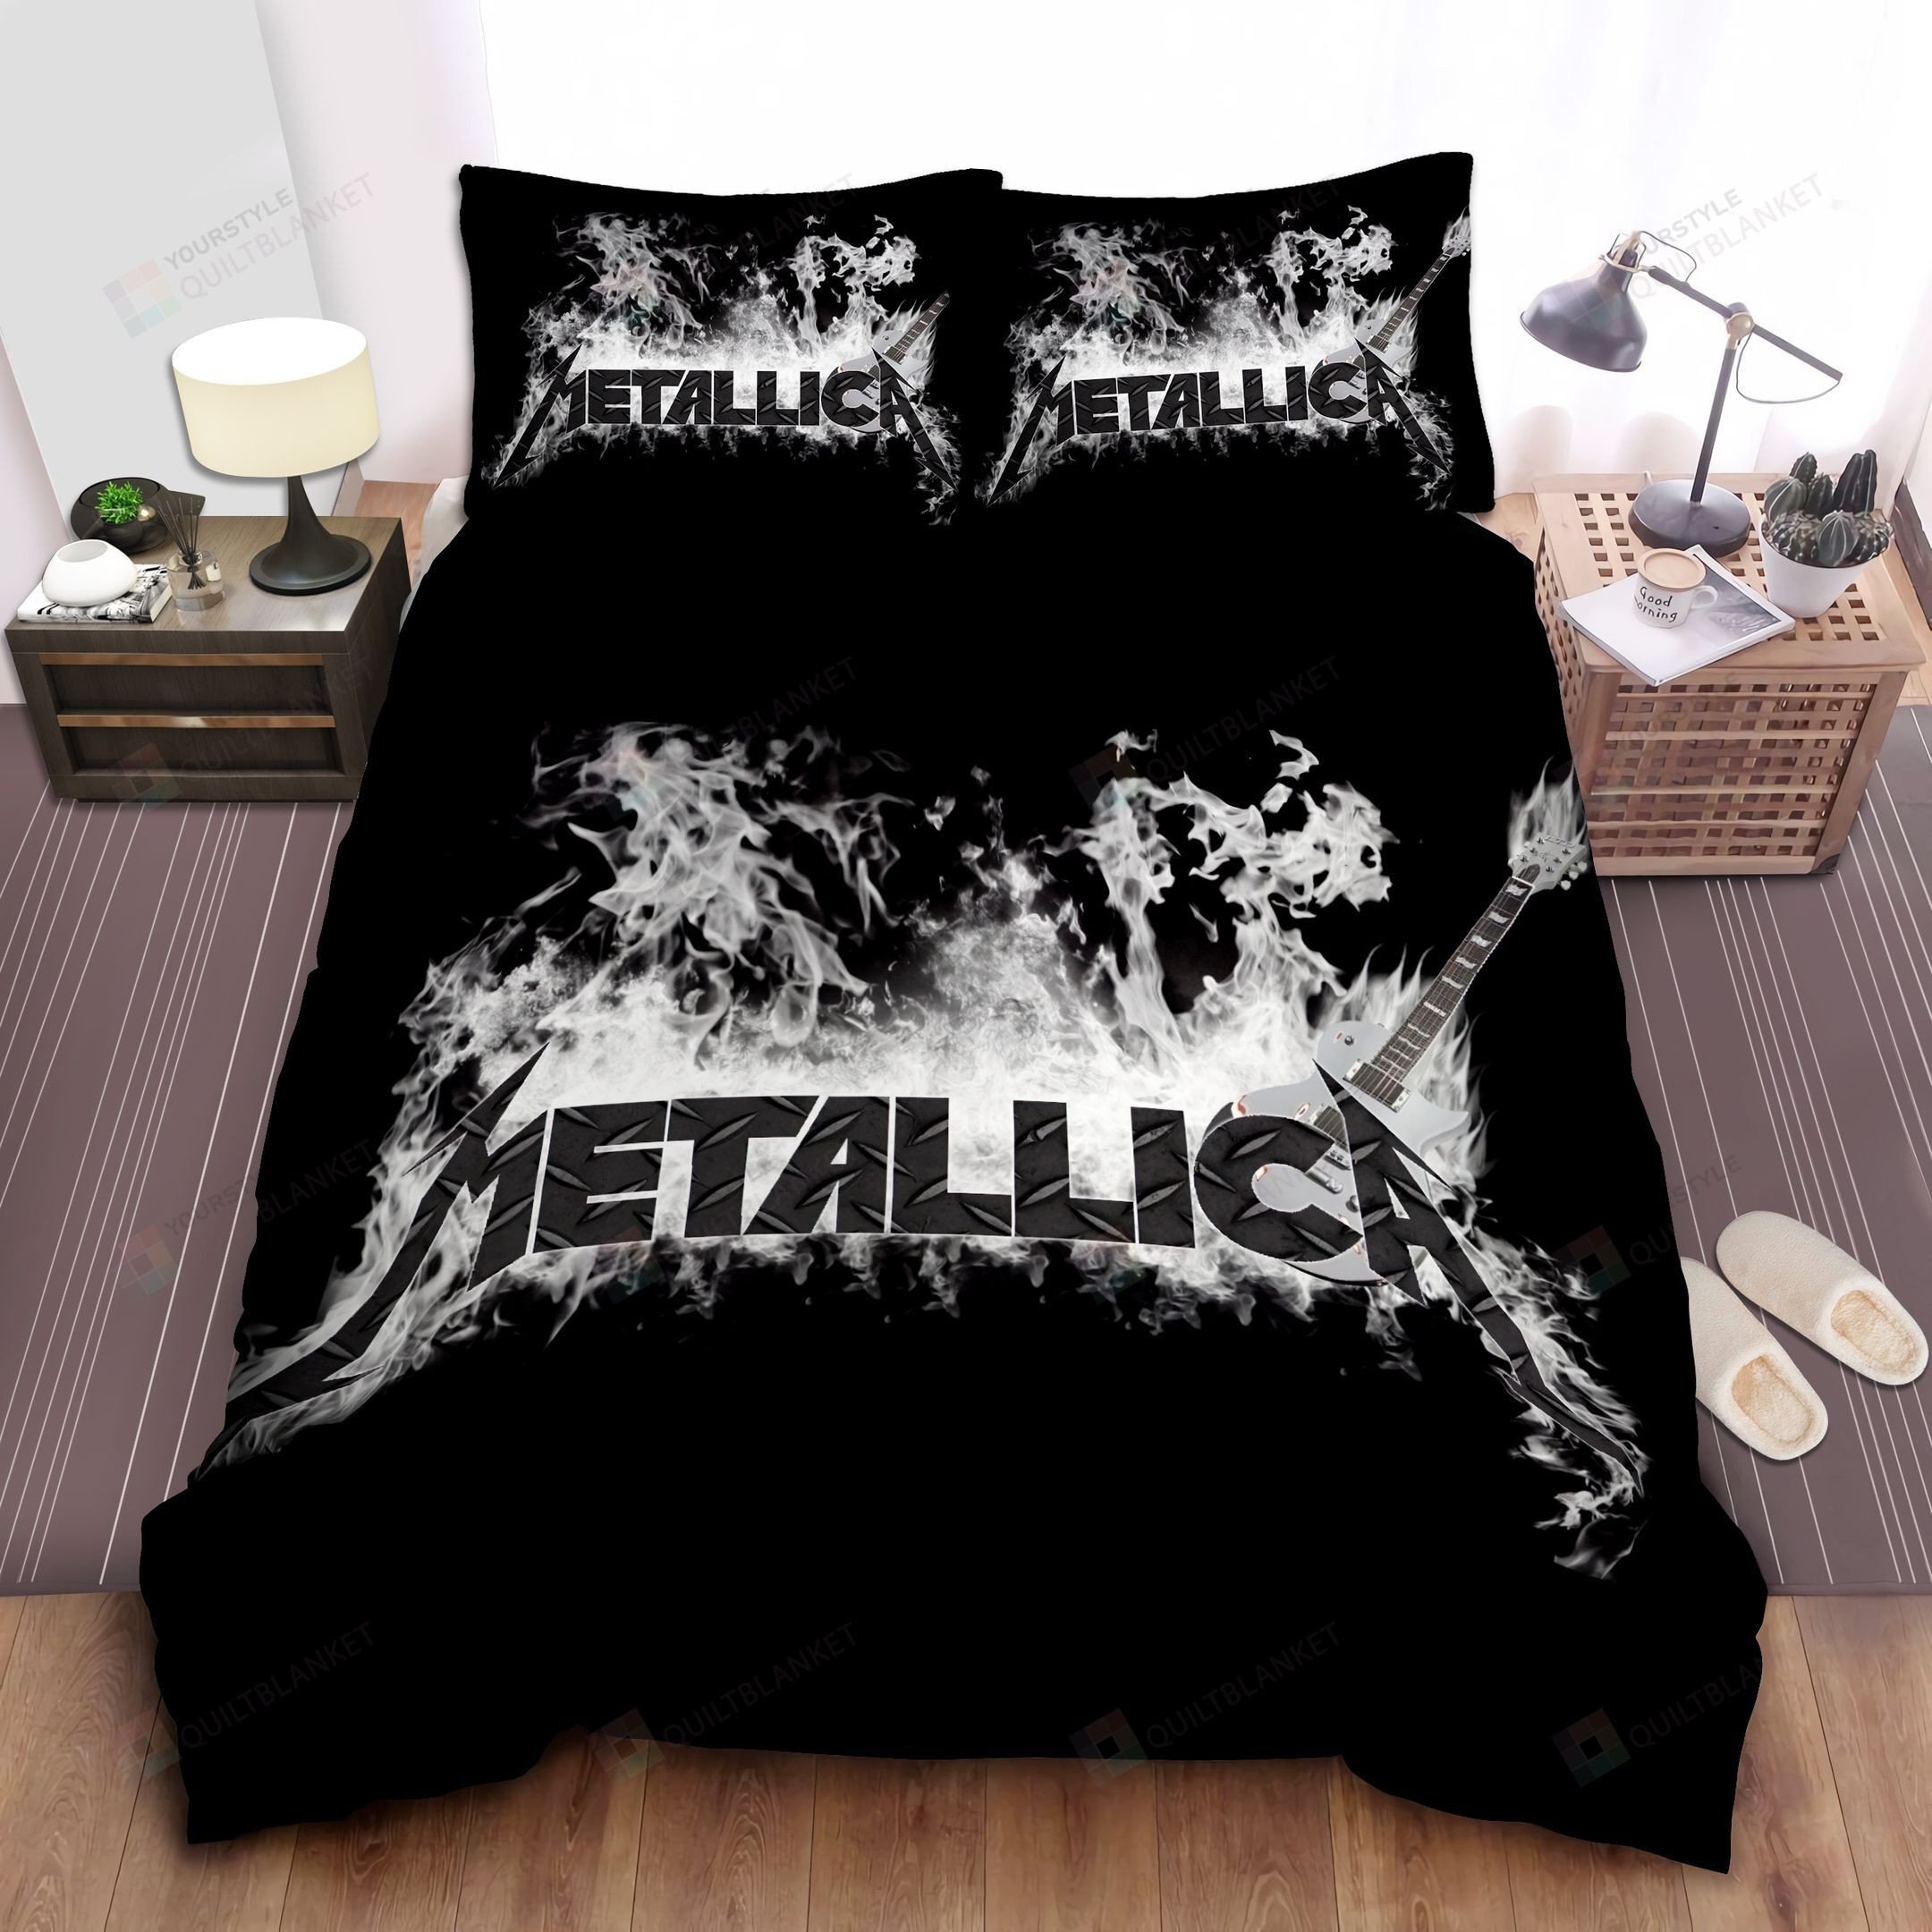 Metallica Black And White Flaming Logo Bed Sheet Duvet Cover Bedding Sets